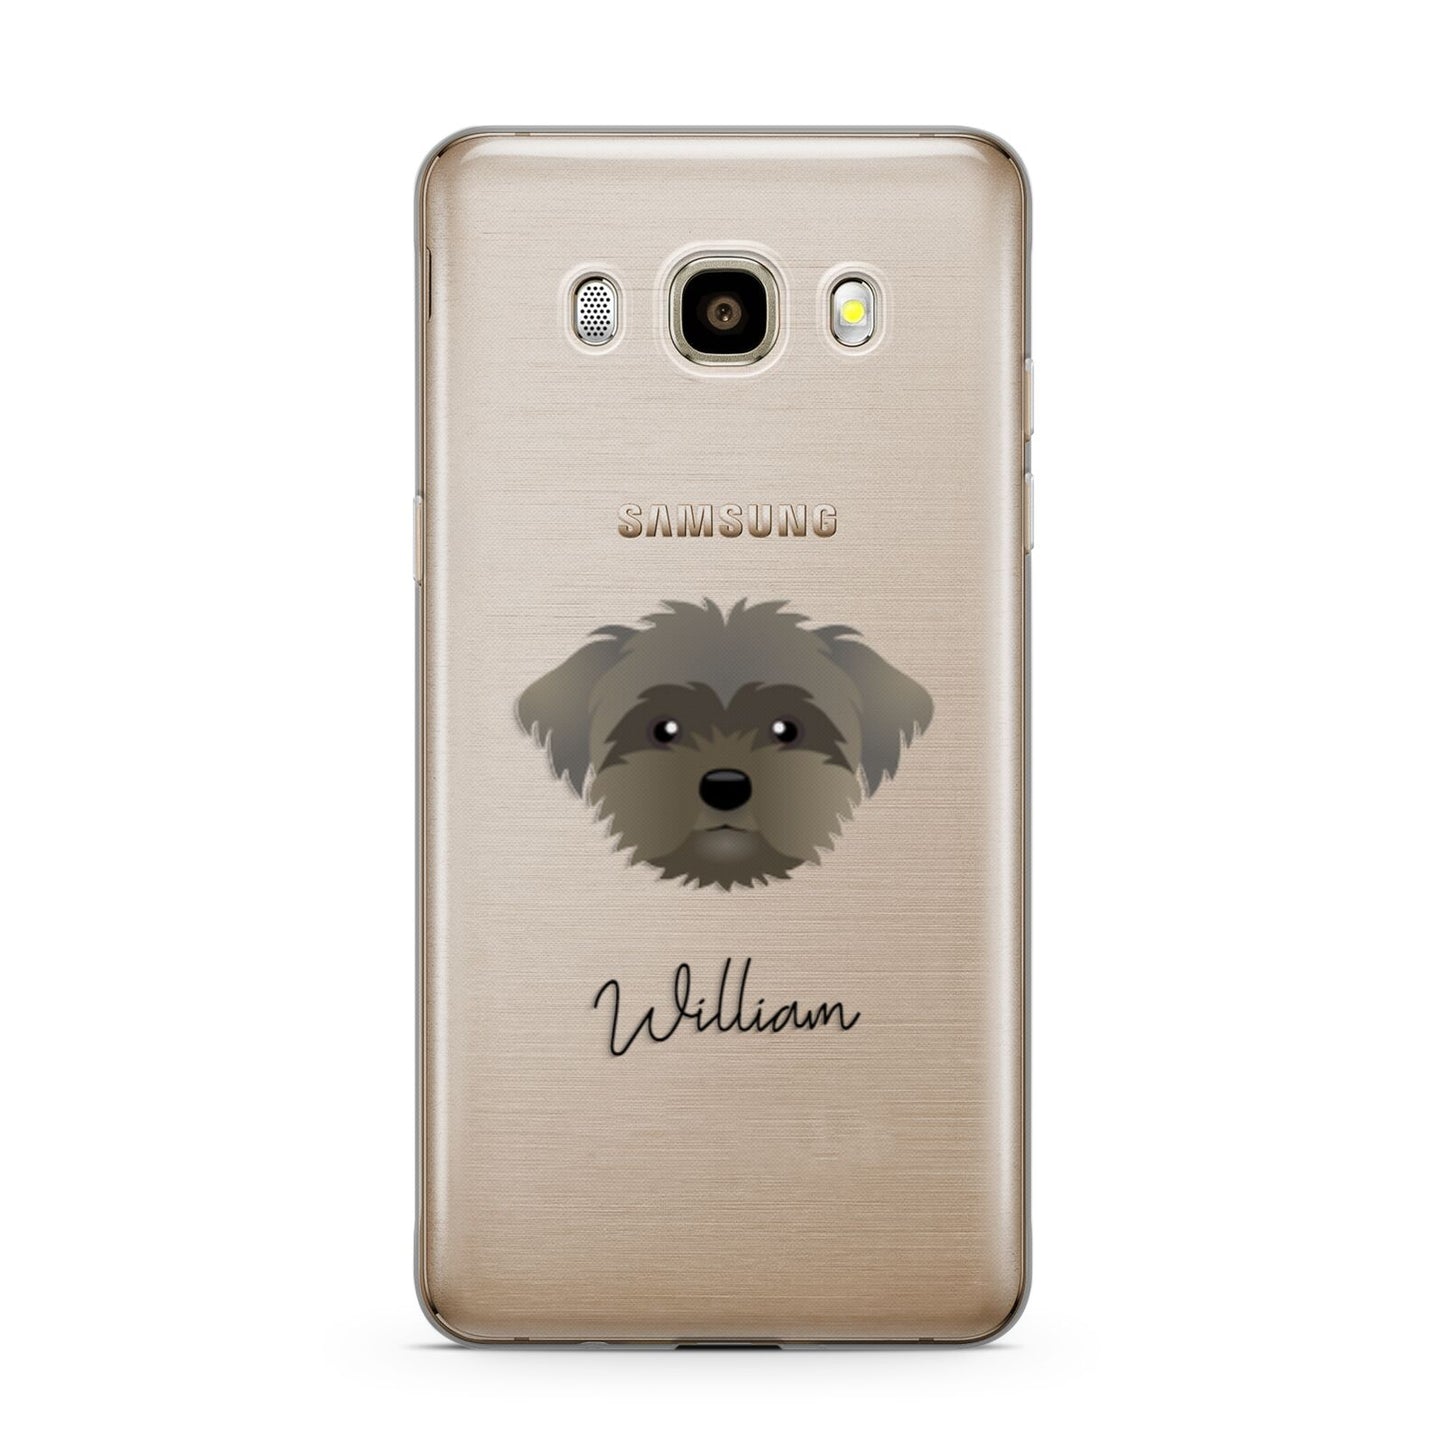 Peek a poo Personalised Samsung Galaxy J7 2016 Case on gold phone